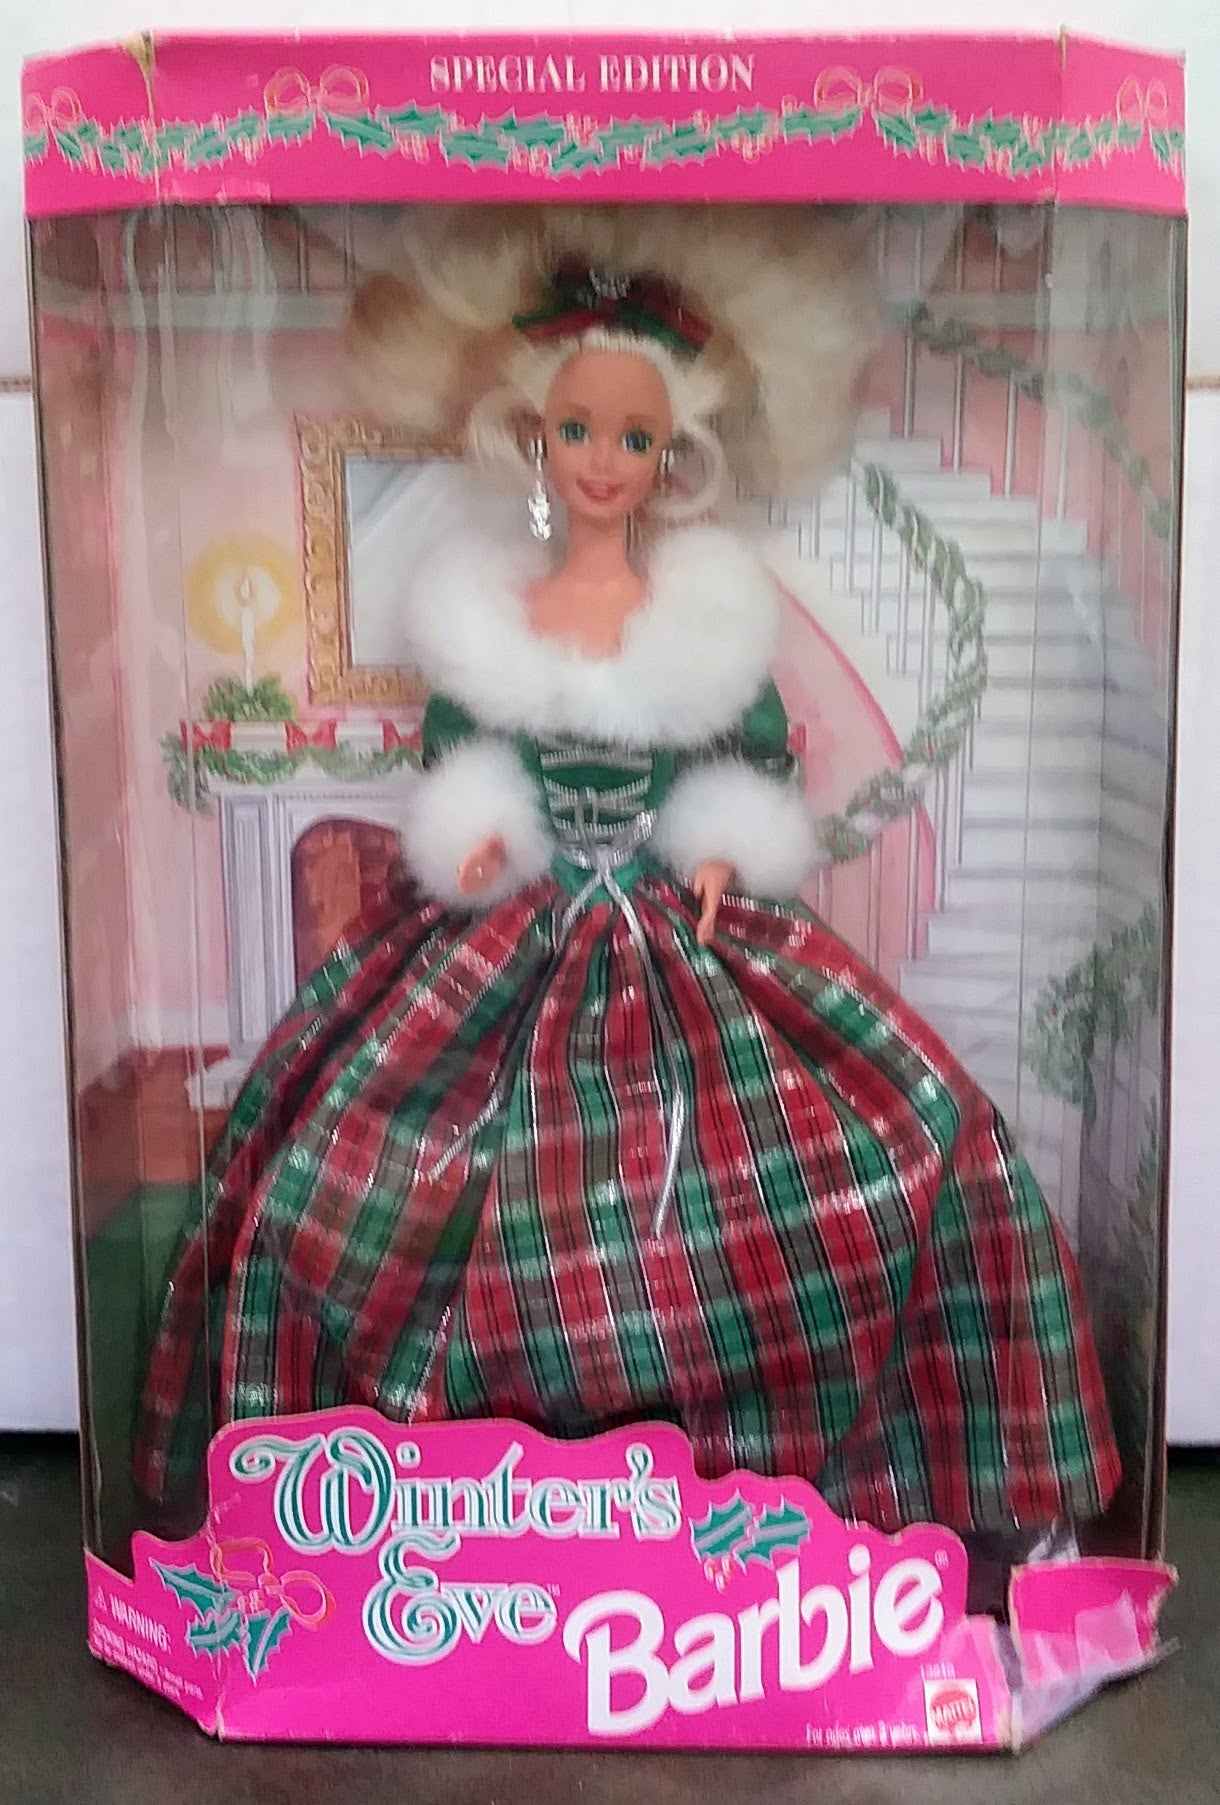 Barbie Doll - Winter's Eve Barbie (1994)